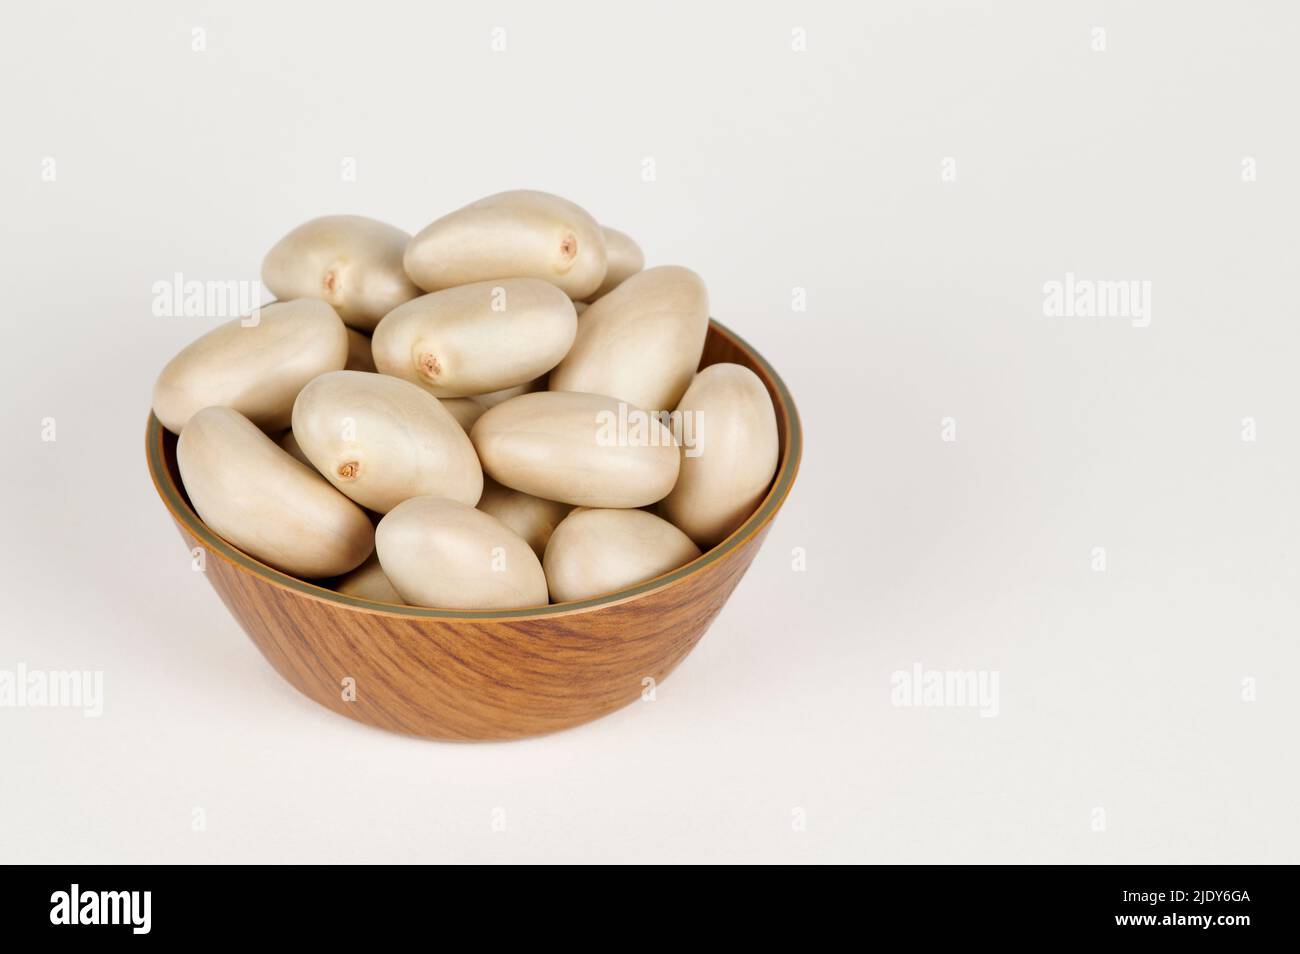 Closeup view of Bowl containing jackfruit seeds (artocarpus heterophyllus) on a white background Stock Photo